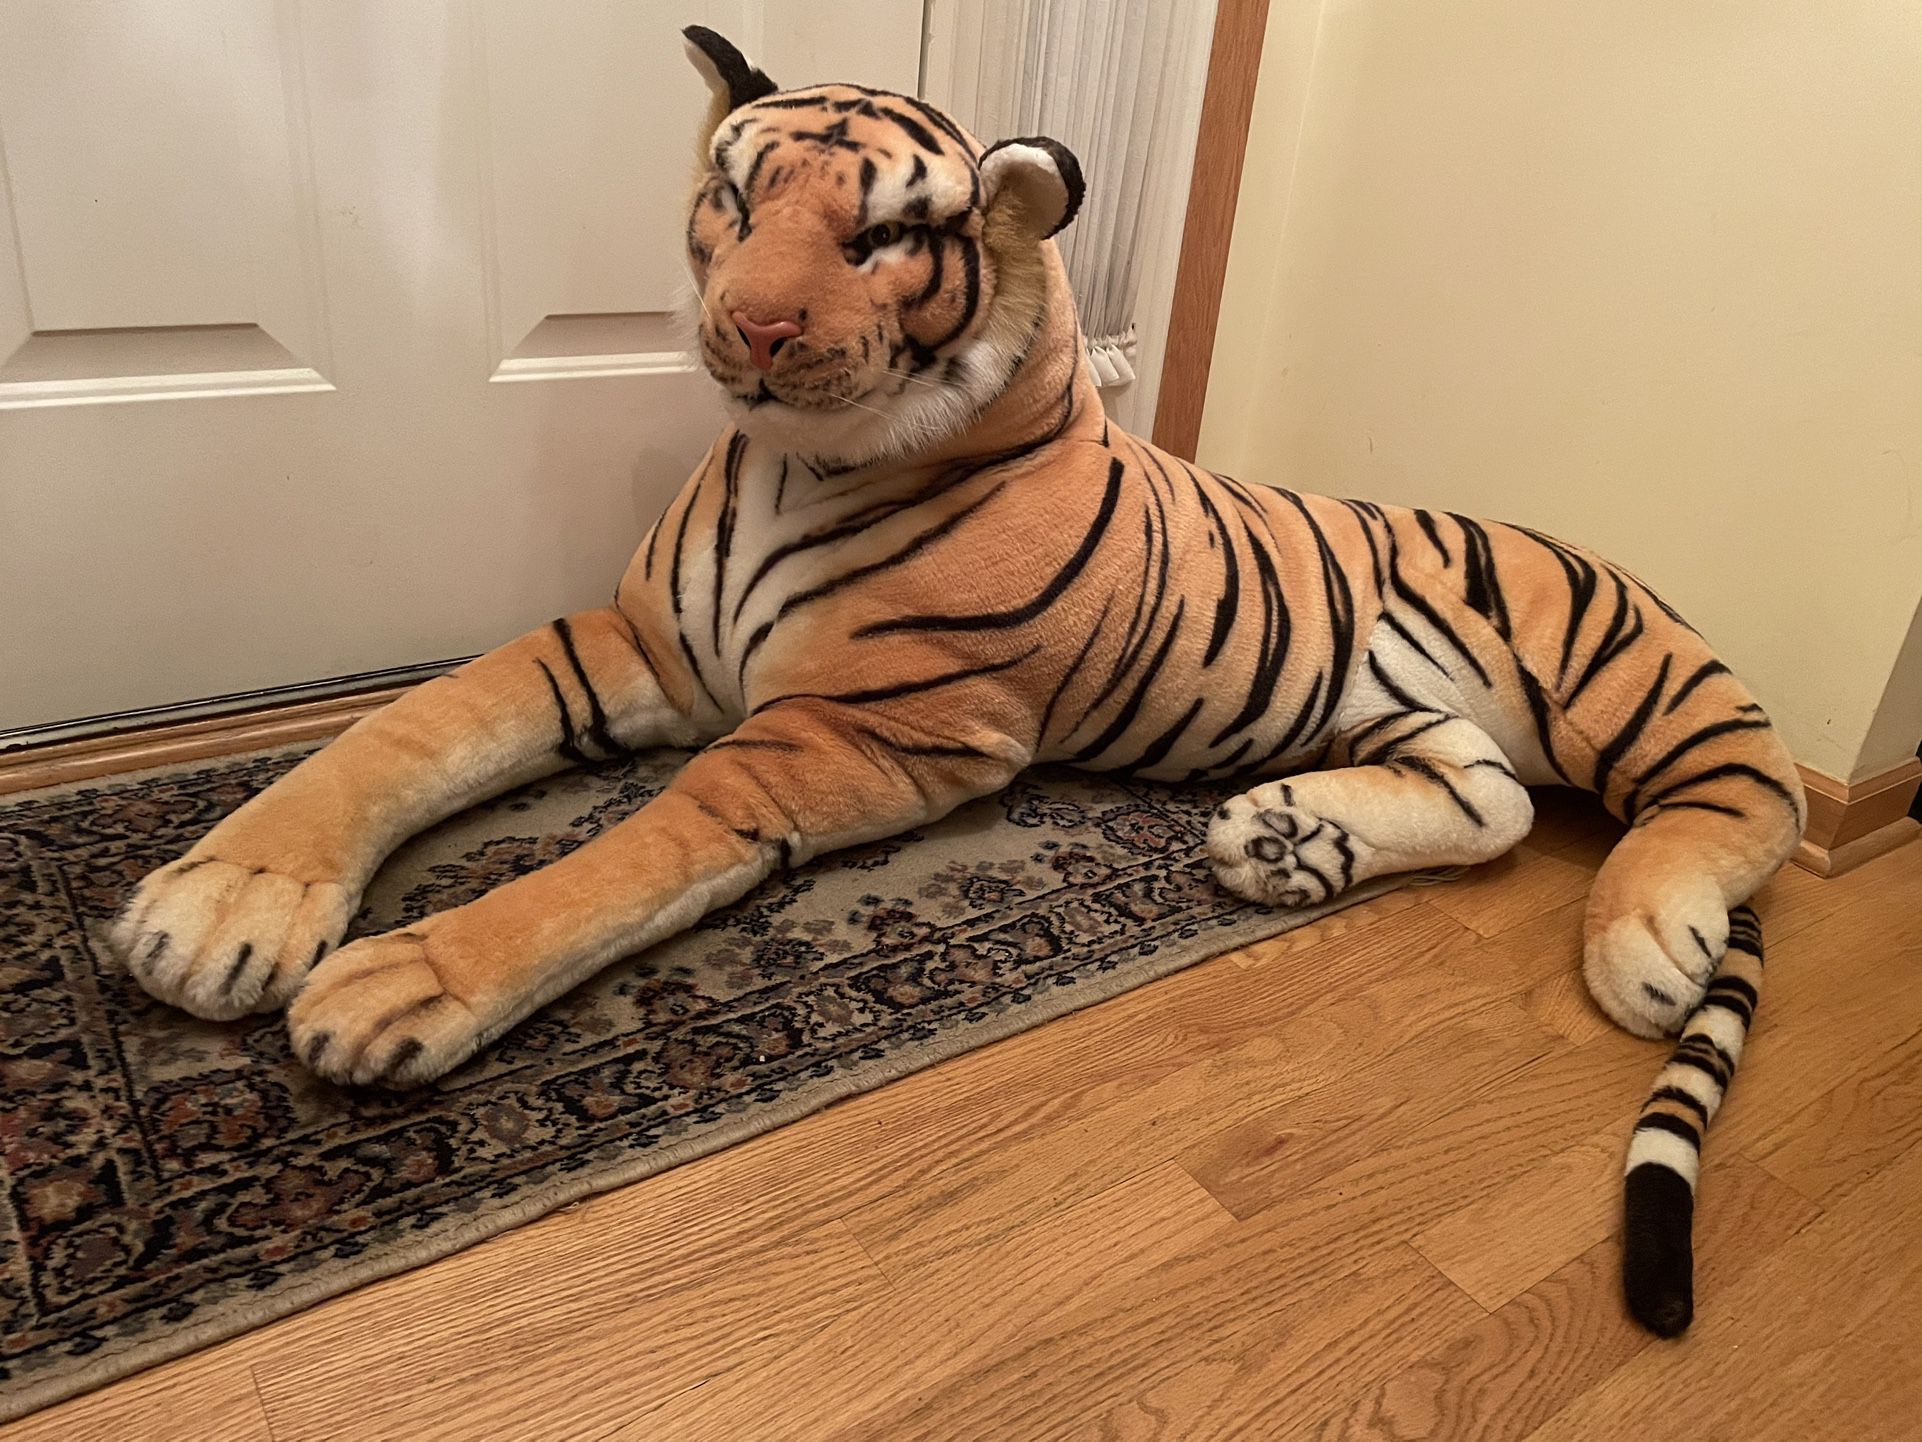 Stuffed Animal Tiger 55” Long